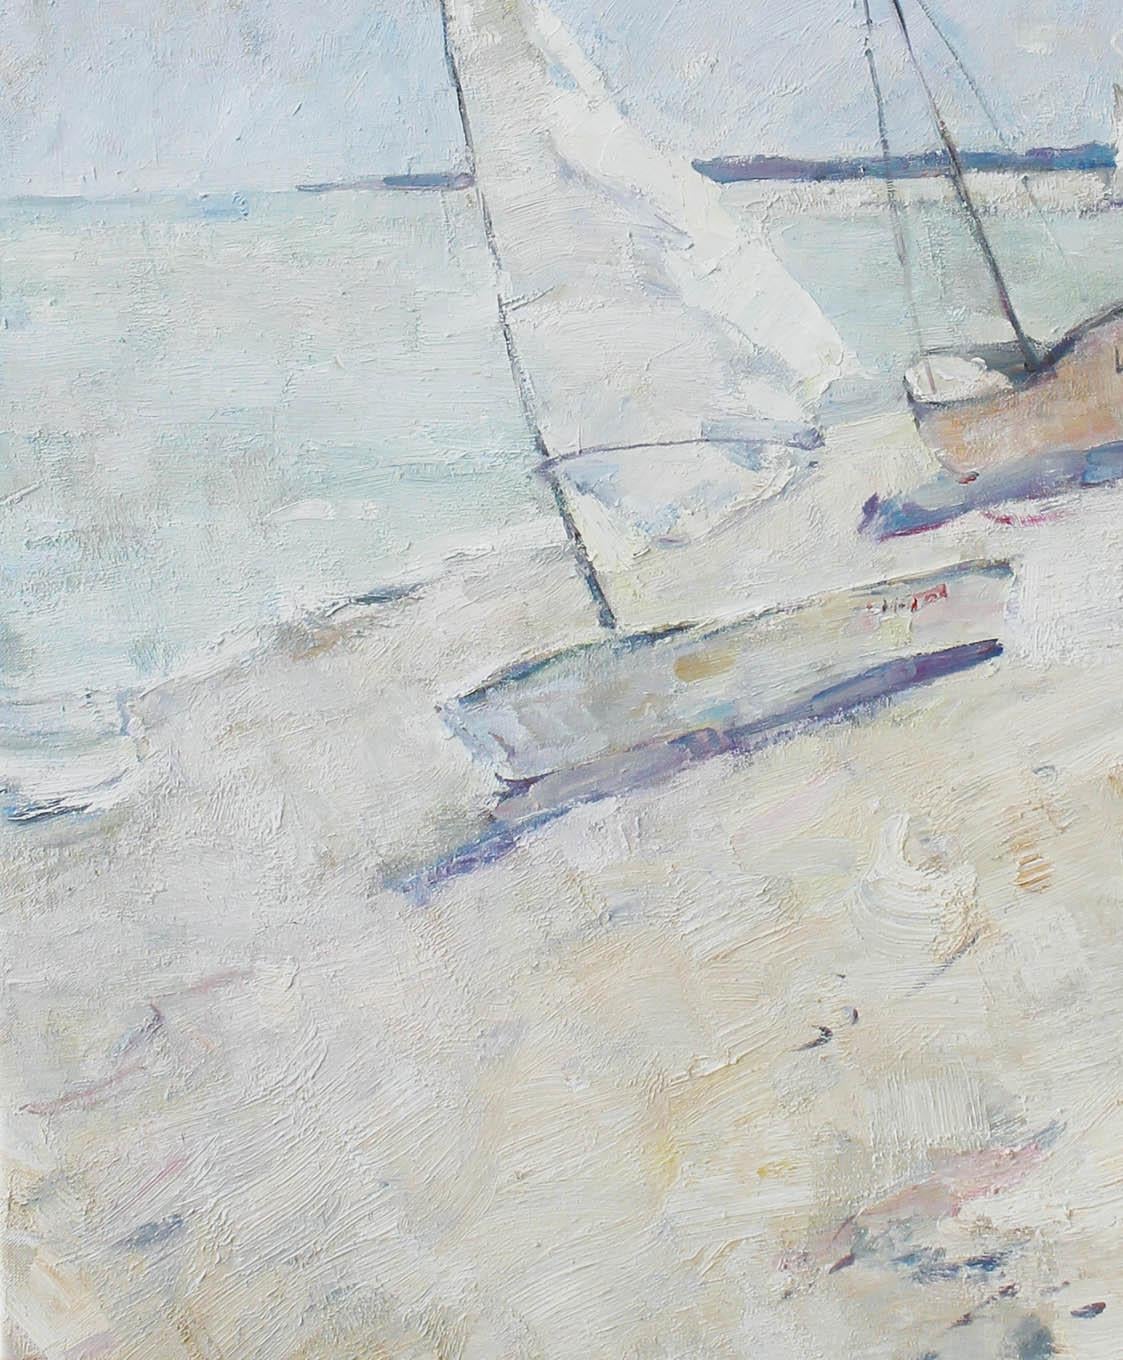 Sailboats  - Gray Landscape Painting by Svetlana Verbovskaya